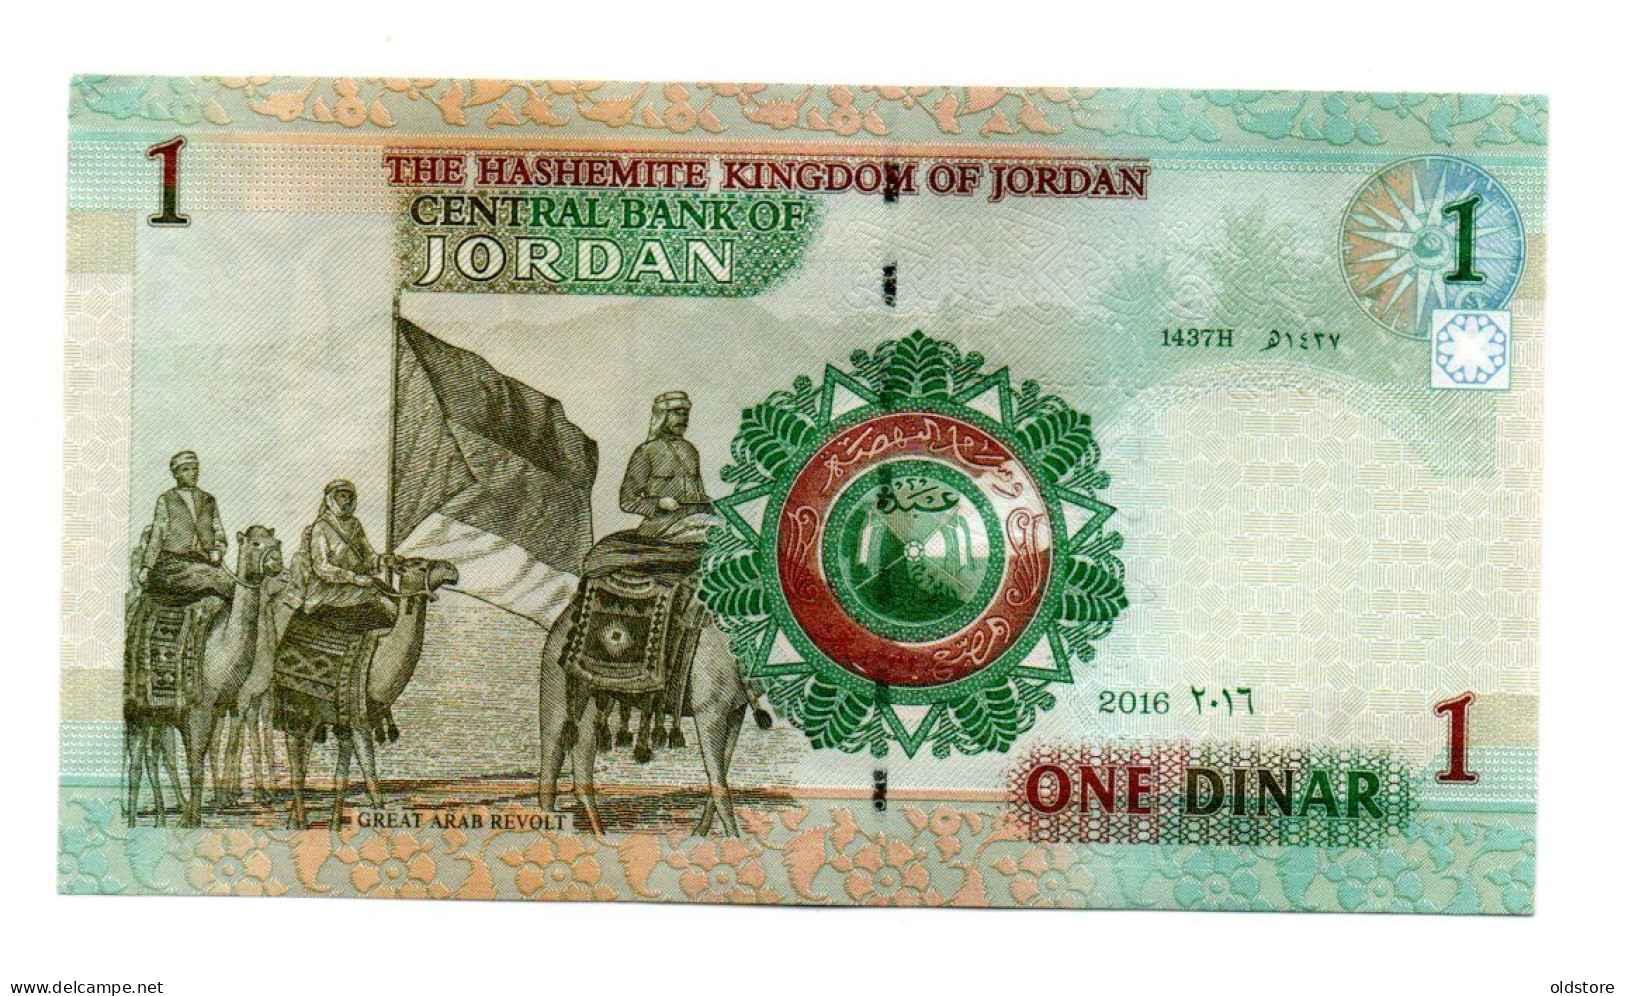 Jordan Banknotes -  10 Rupees -  2016 - Low Serial Number ( 000016 ) - UNC - Jordanien